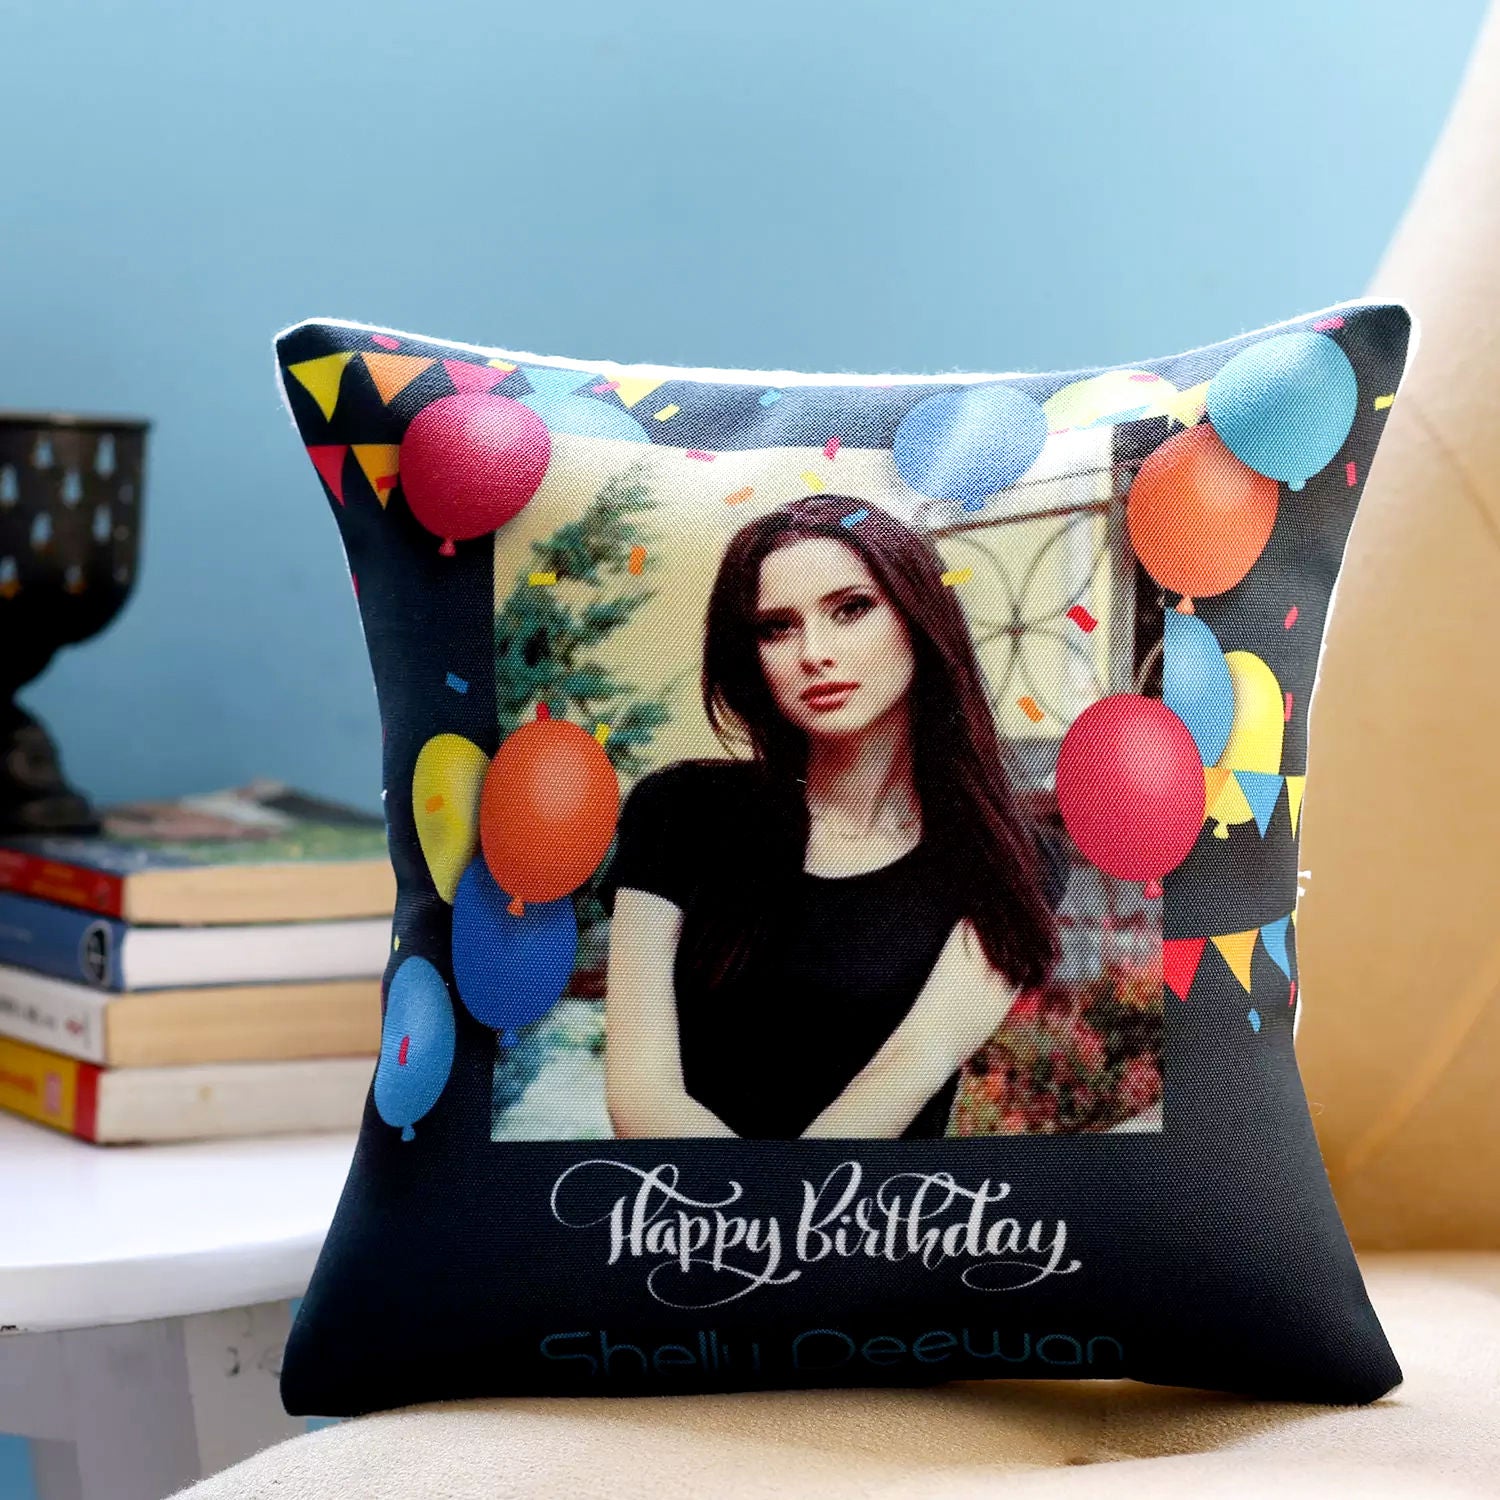 Personalised Birthday Balloons Cushion